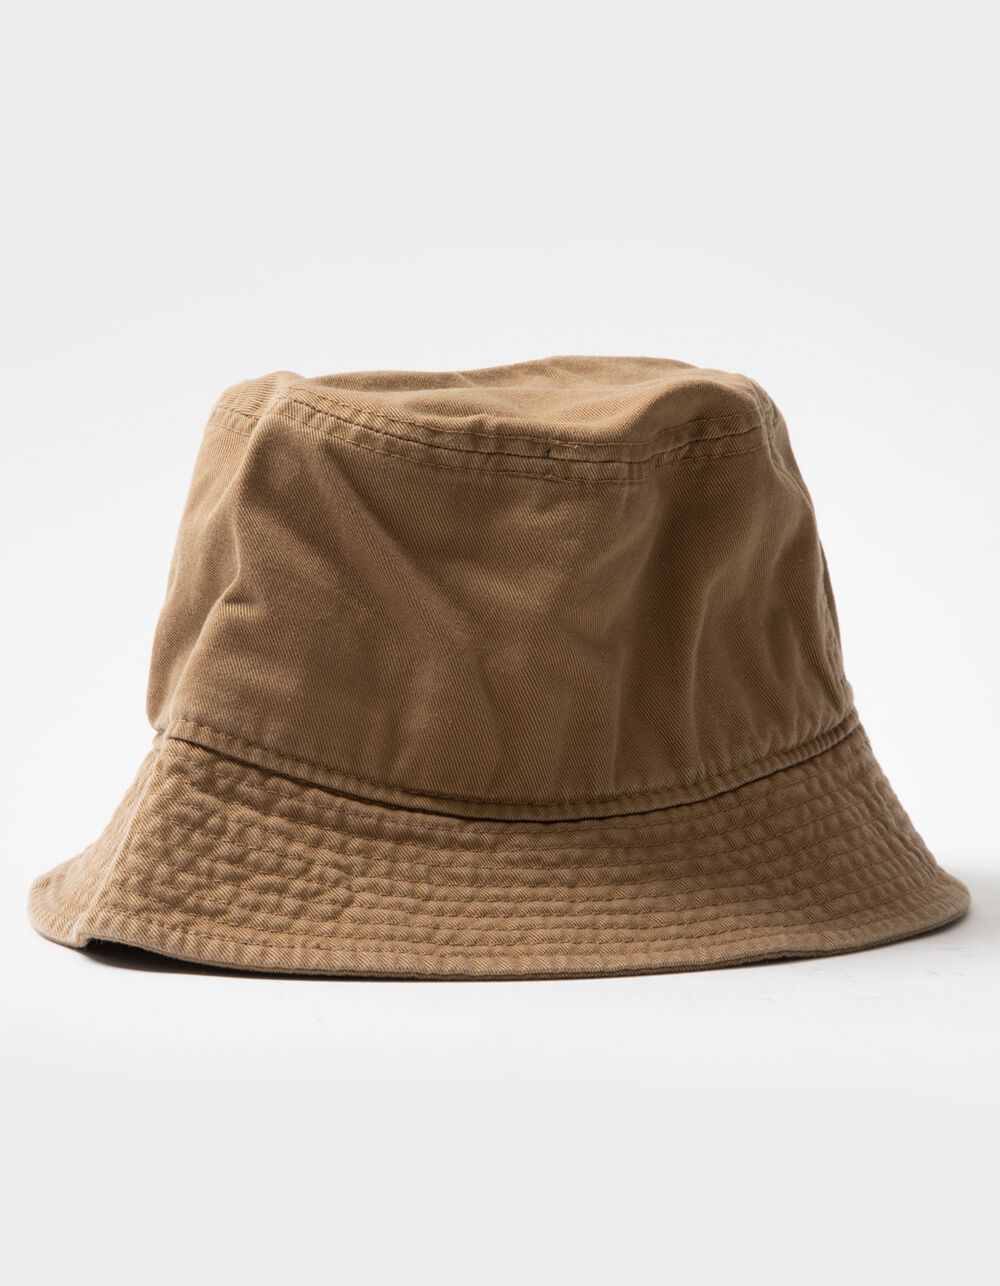 NIKE Futura Bucket Hat - TAN | Tillys